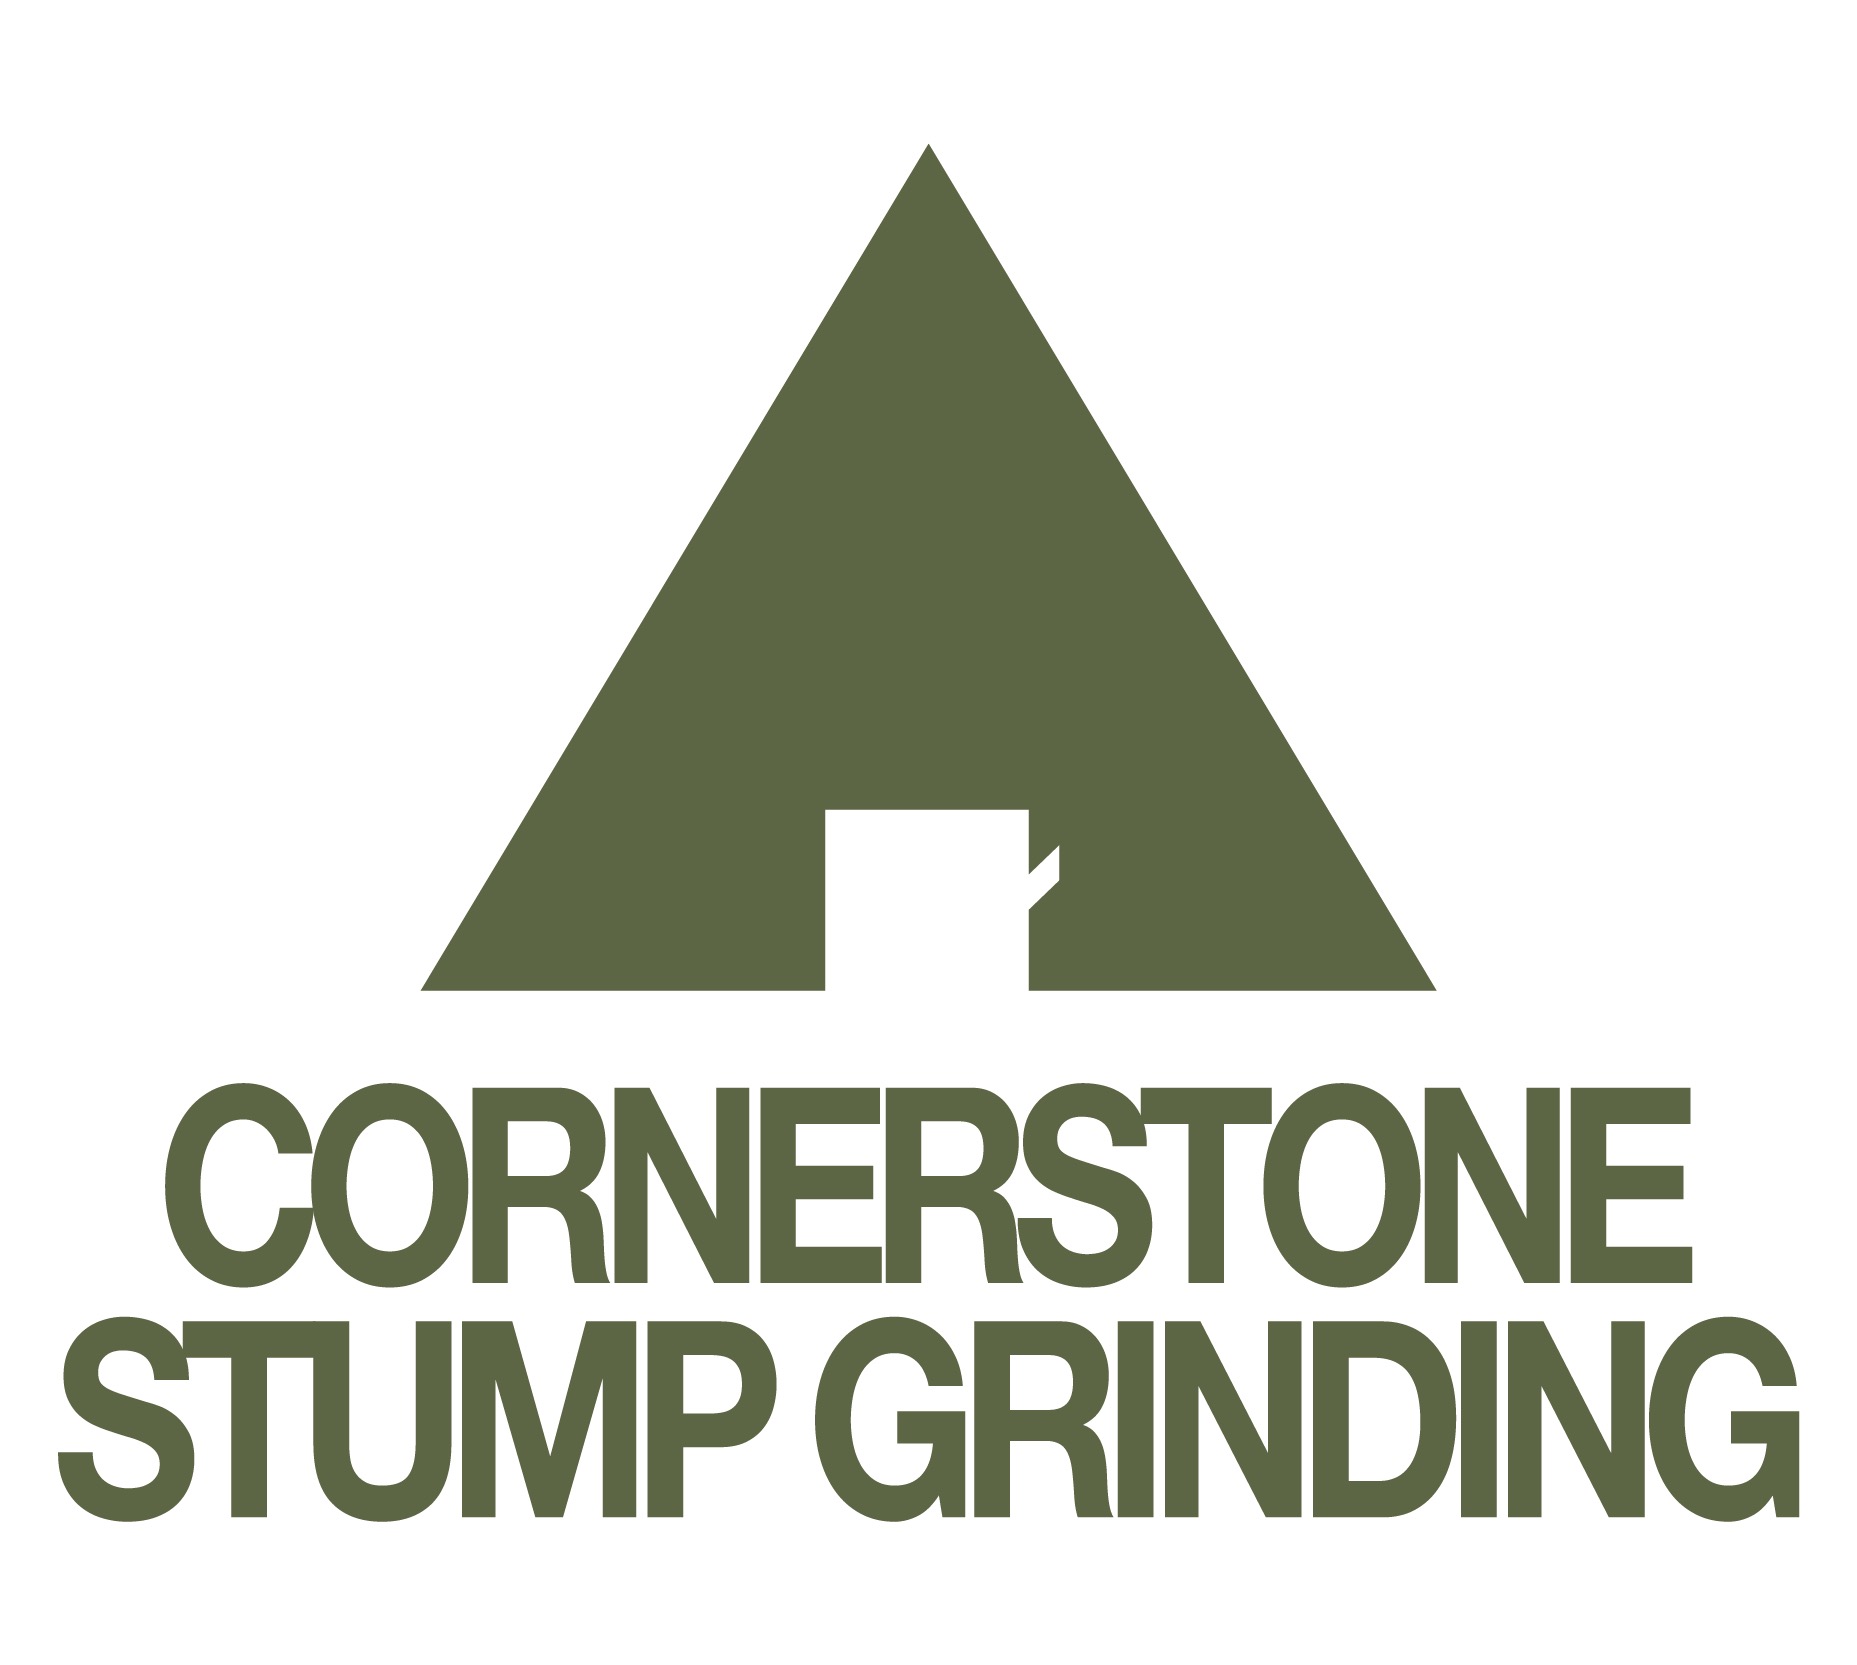 Professional Stump Grinding Jacksonville FloridaCornerstone Stump Grinding 